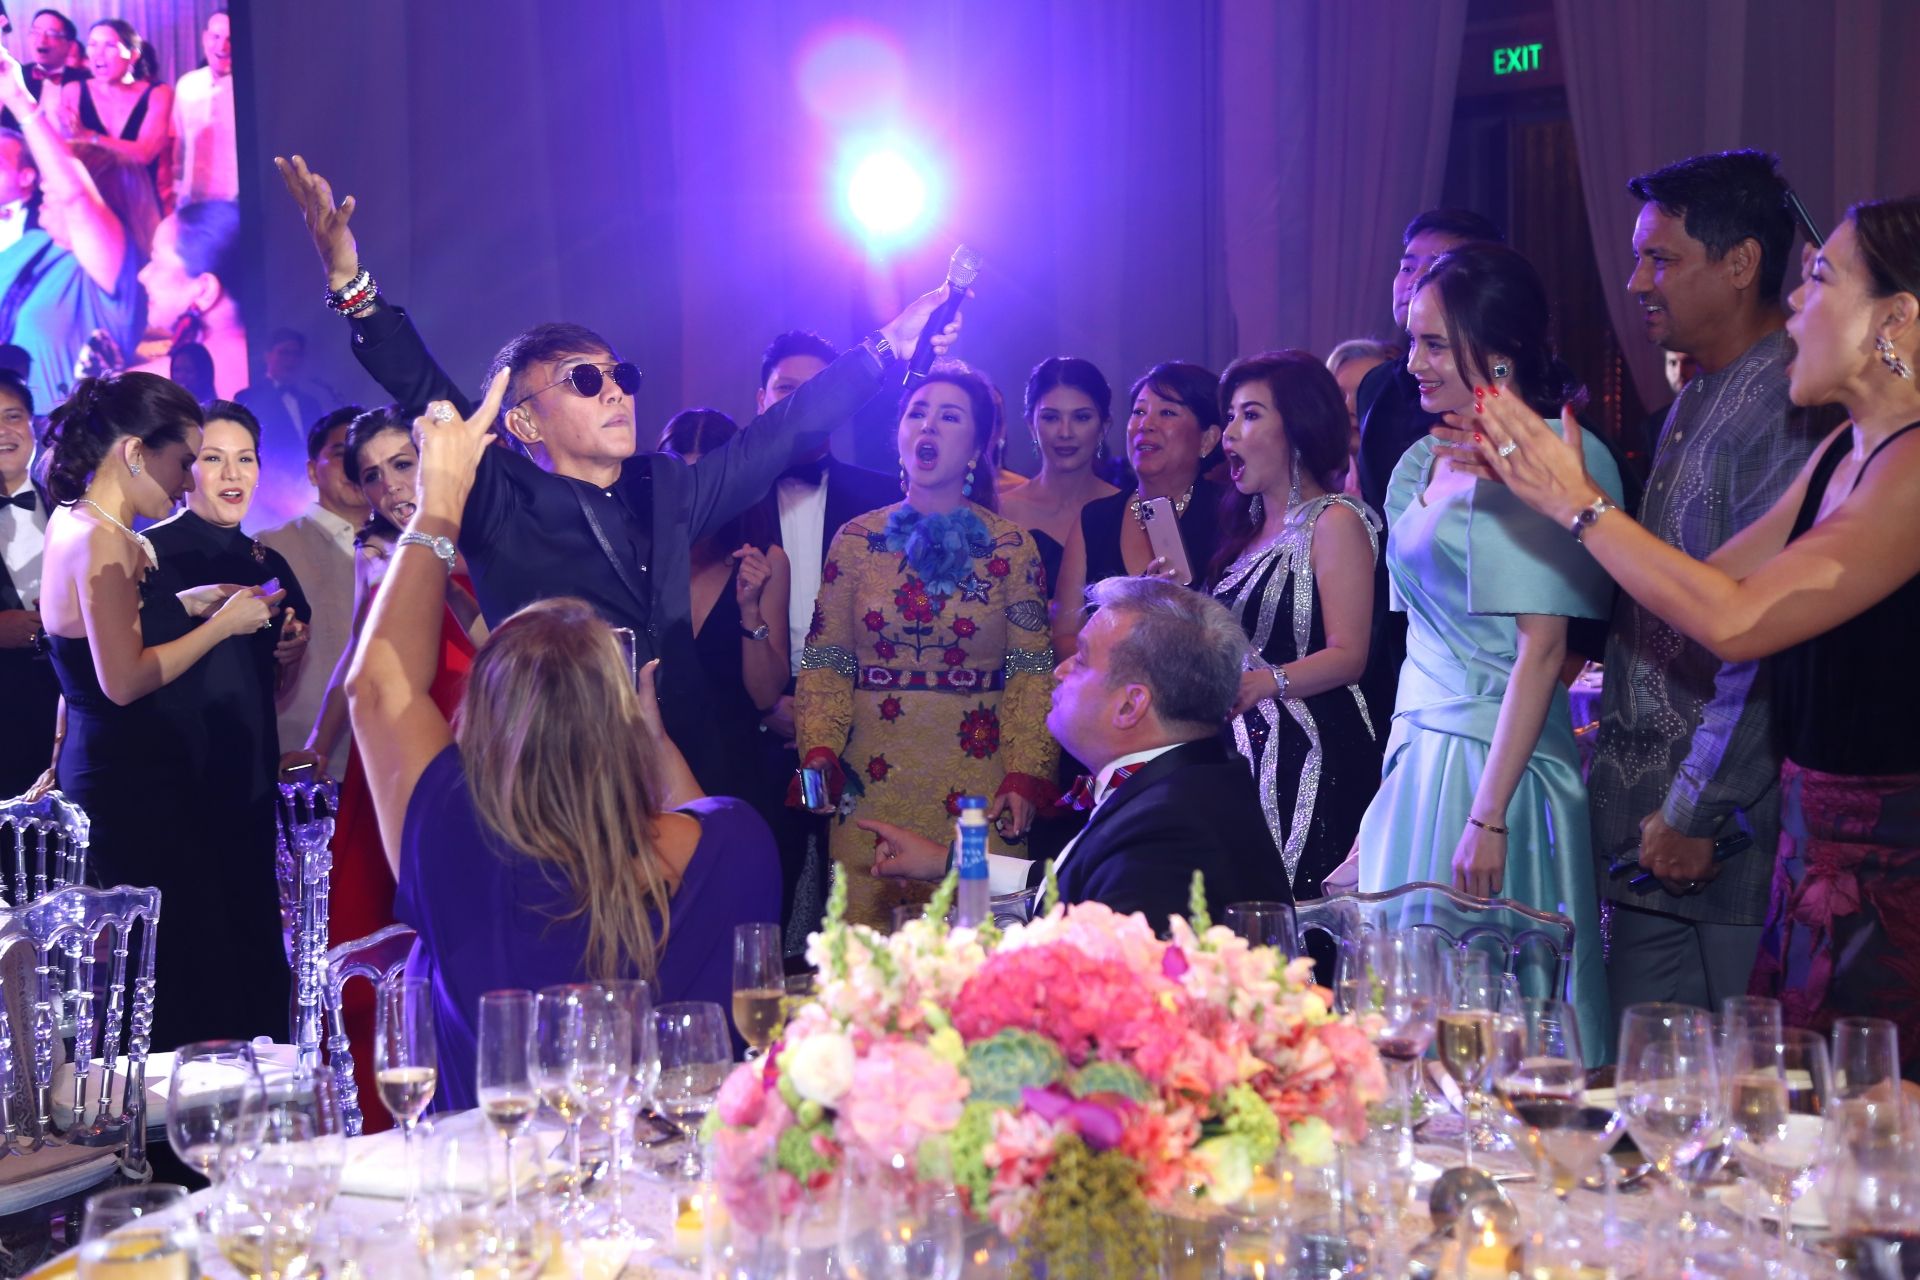 Scenes From The Dancefloor at the 2019 Philippine Tatler Ball